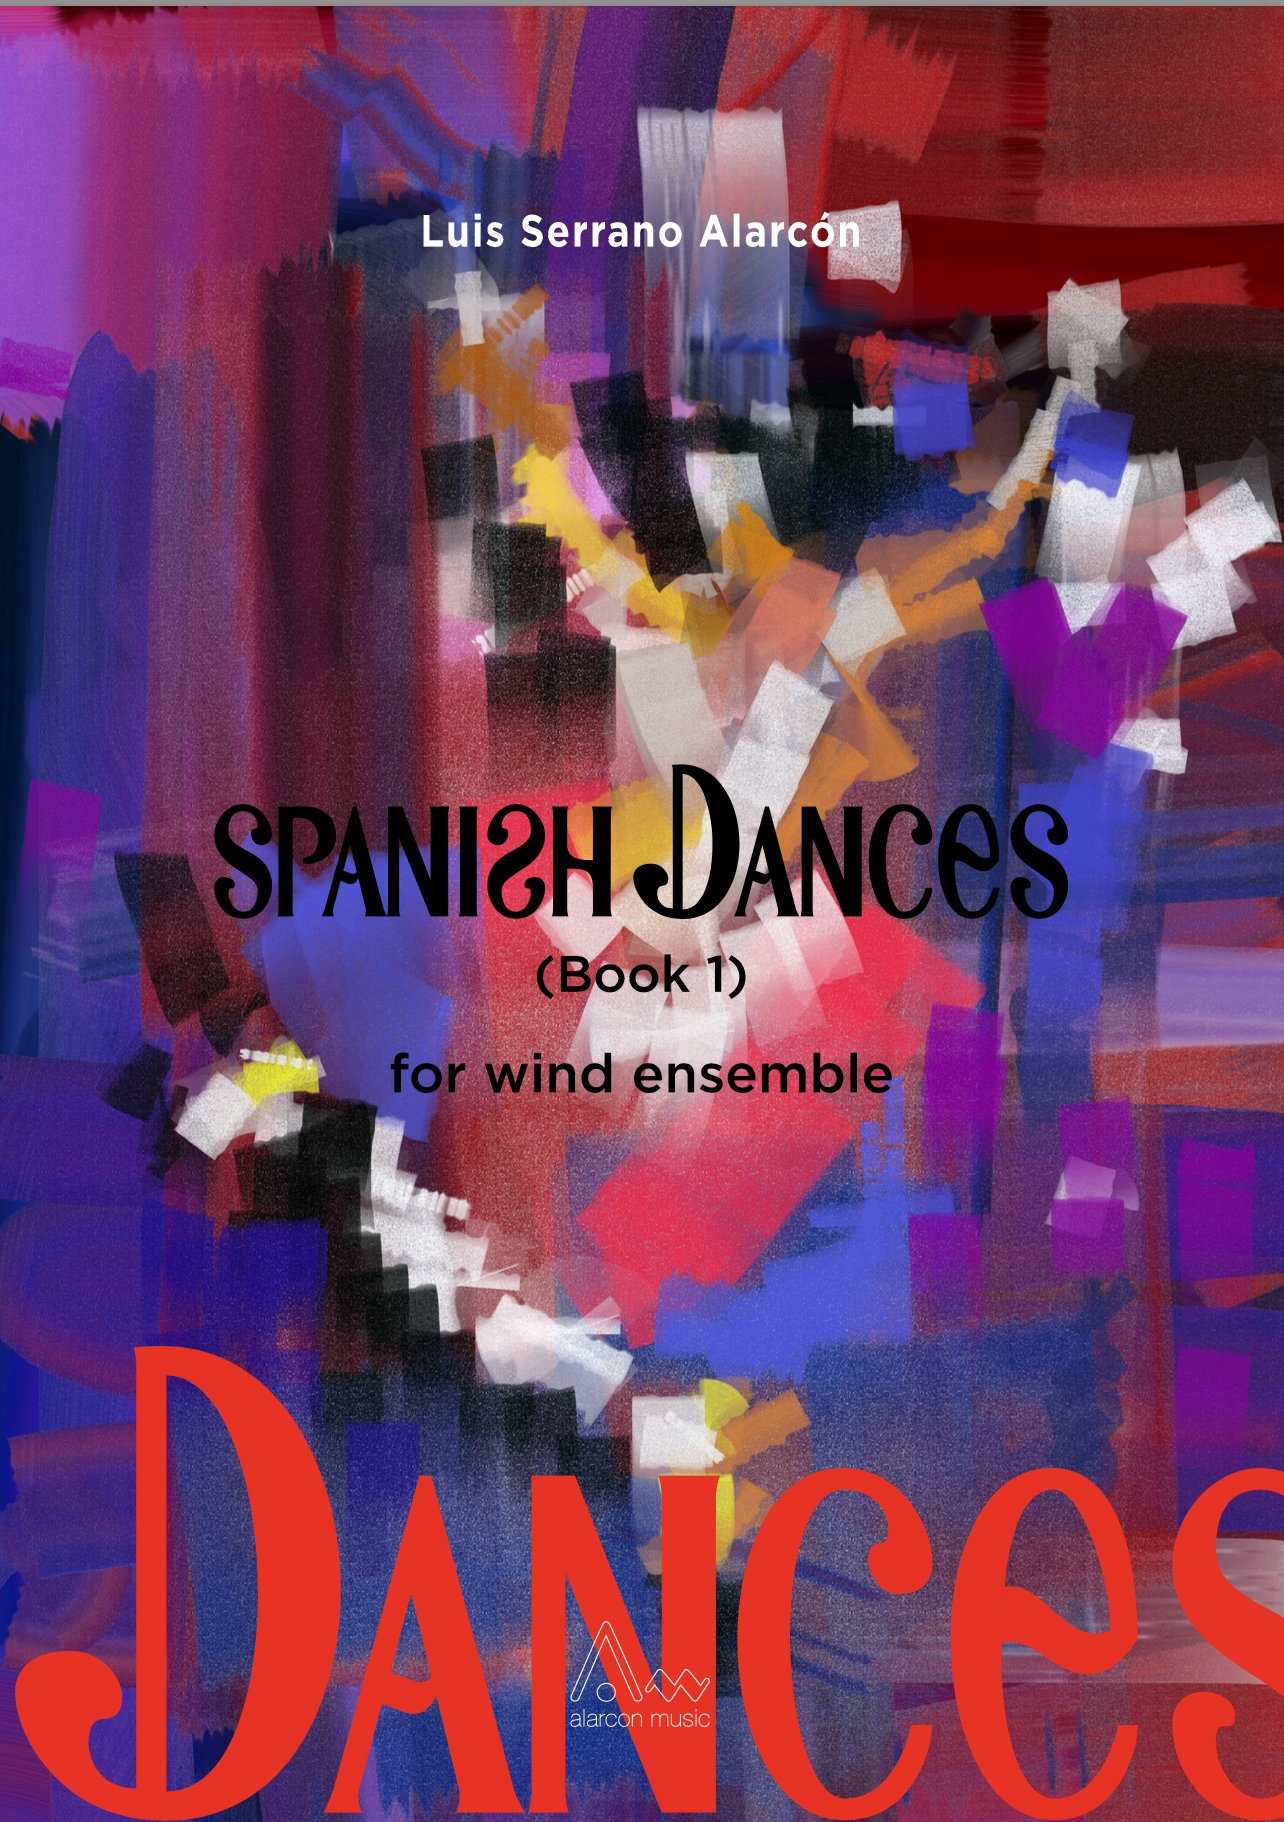 Spanish Dances by Luis Serrano Alacron